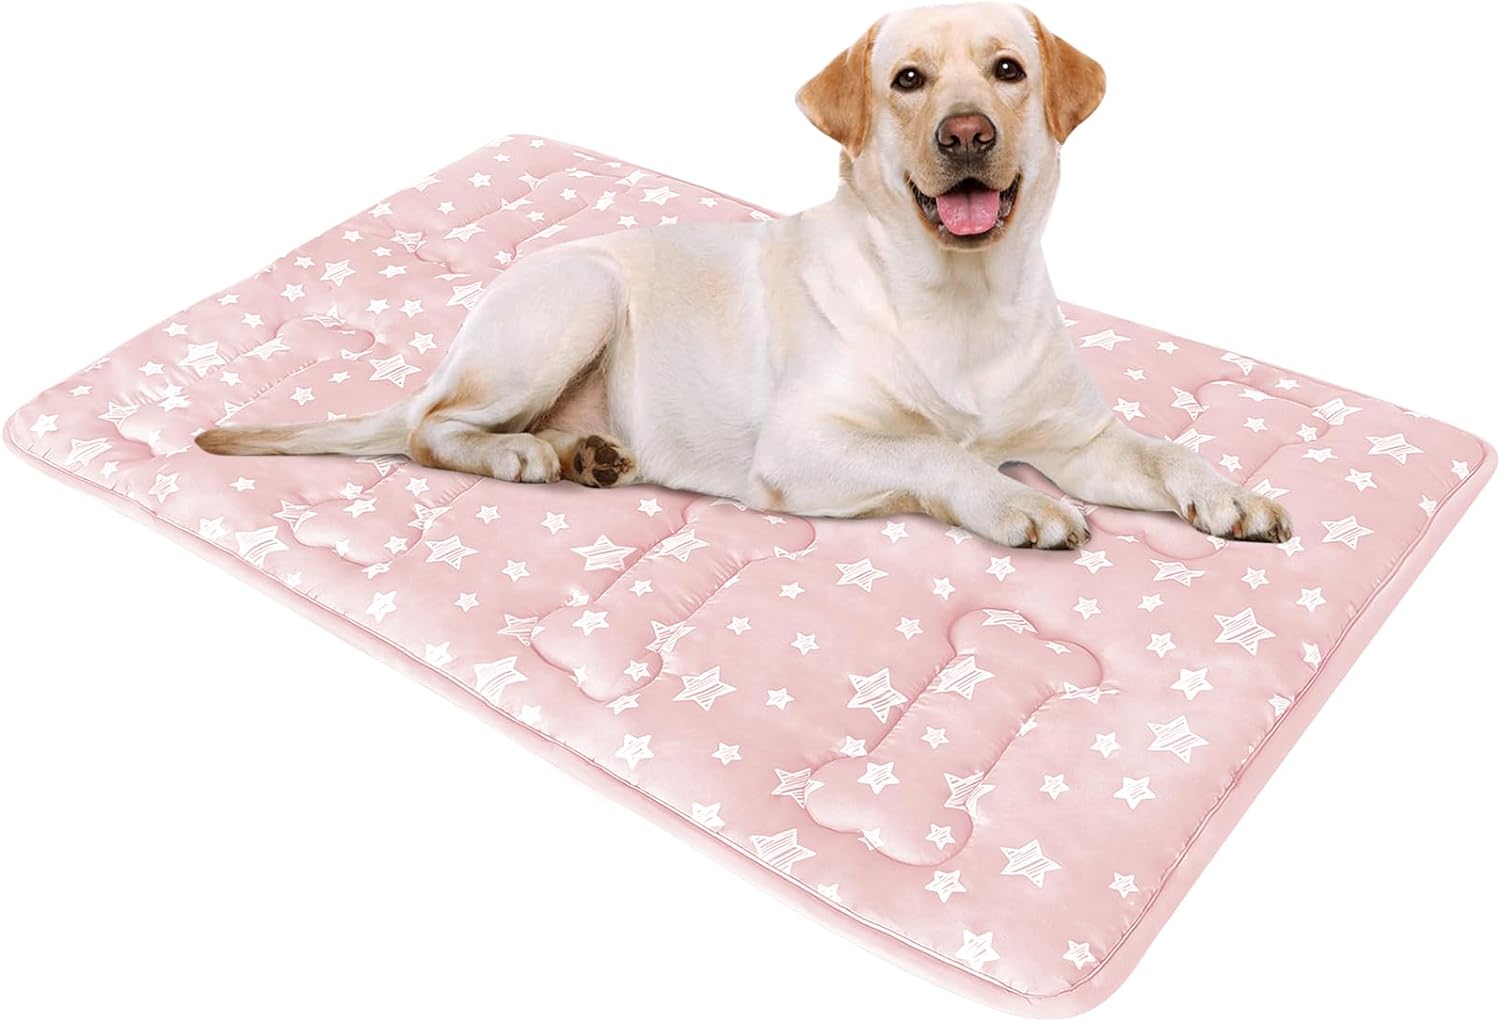 Dog Crate Mat- Soft ,Star Prints, Anti-Slip Bottom, Machine Washable,Pink Star-Moonsea Bedding